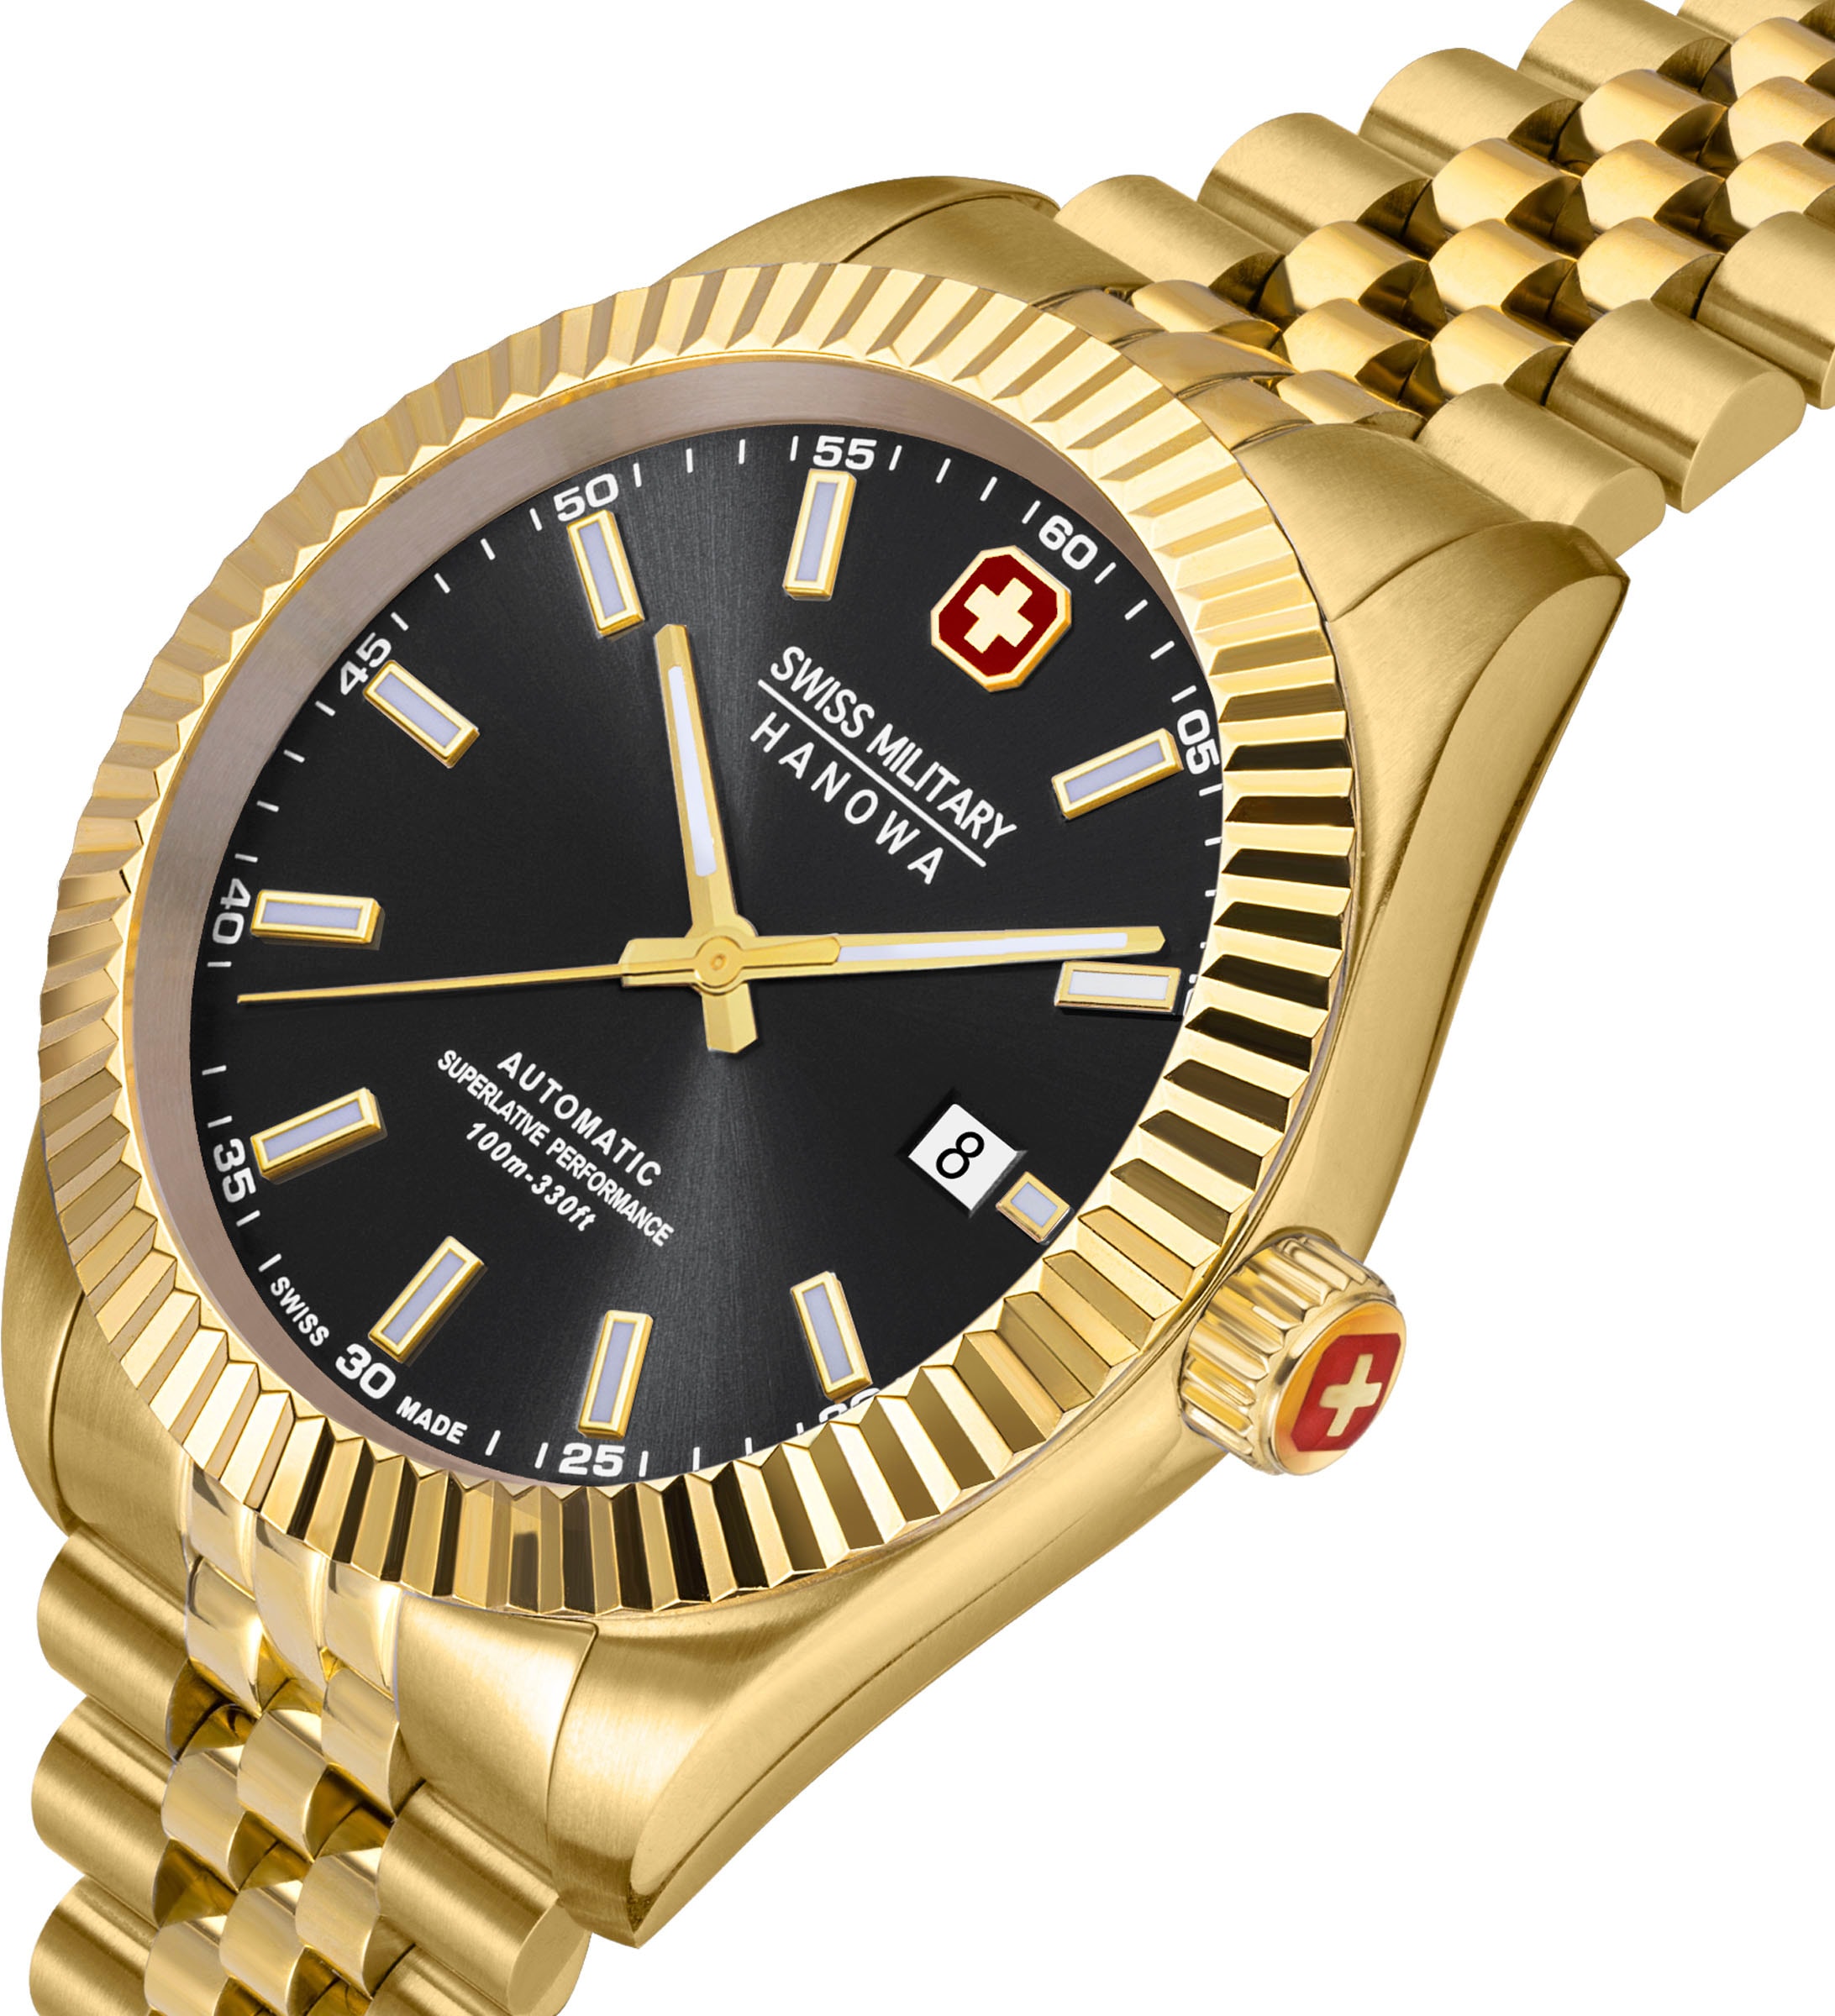 Swiss Military Hanowa Schweizer Uhr »AUTOMATIC
DILIGENTER, SMWGL0002110«, Quarzuhr, Armbanduhr, Herrenuhr, Swiss Made, Datum, Saphirglas, analog